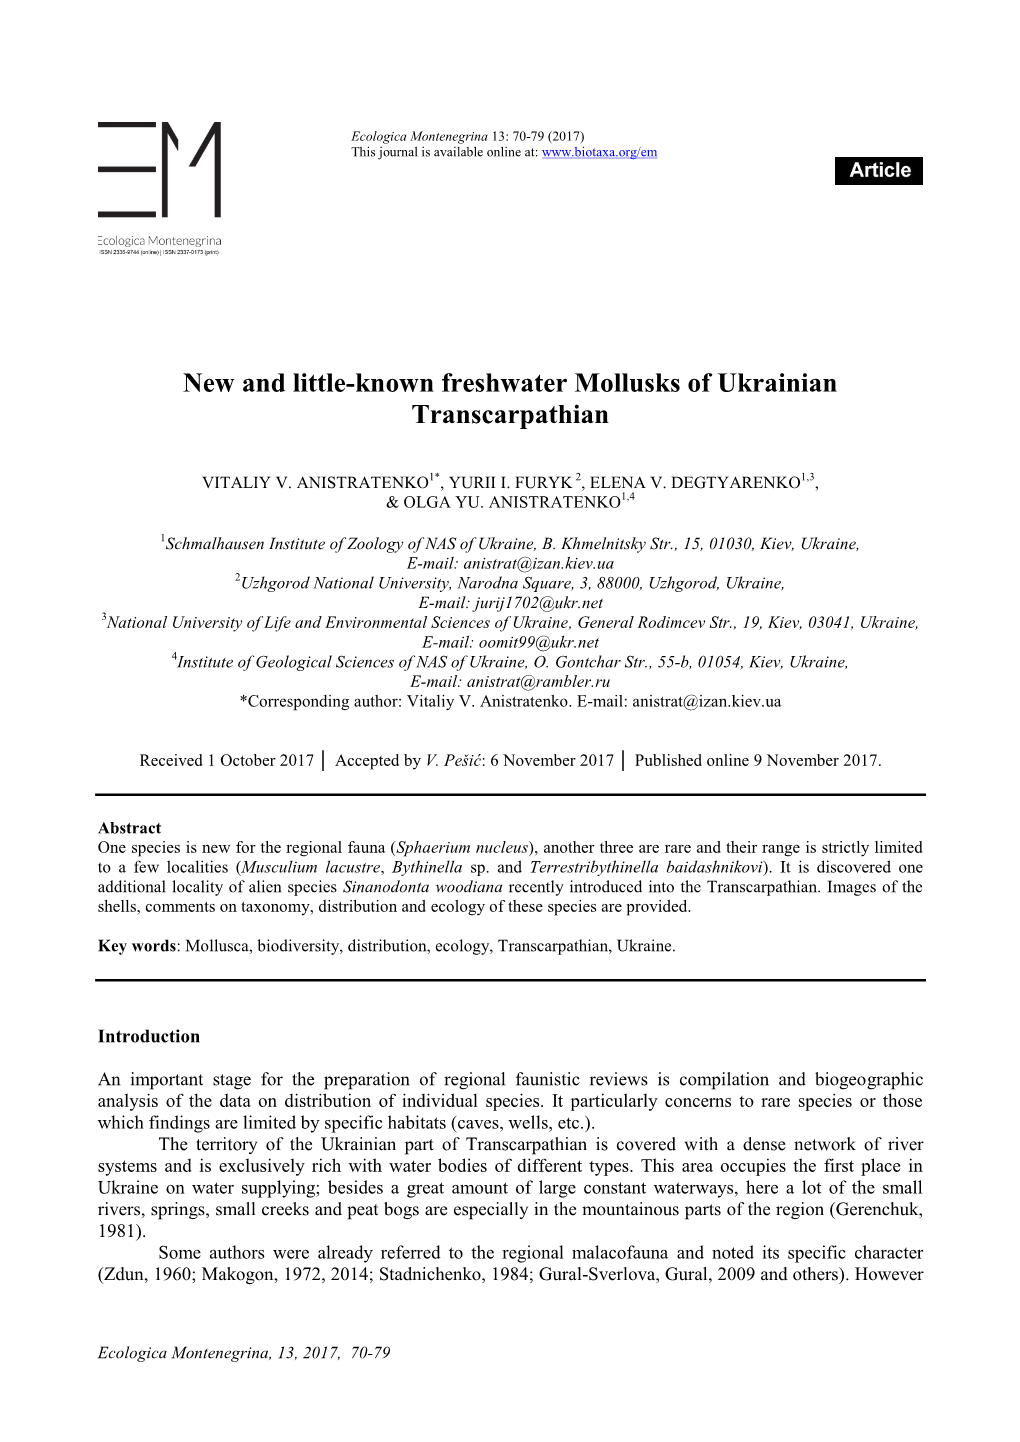 New and Little-Known Freshwater Mollusks of Ukrainian Transcarpathian